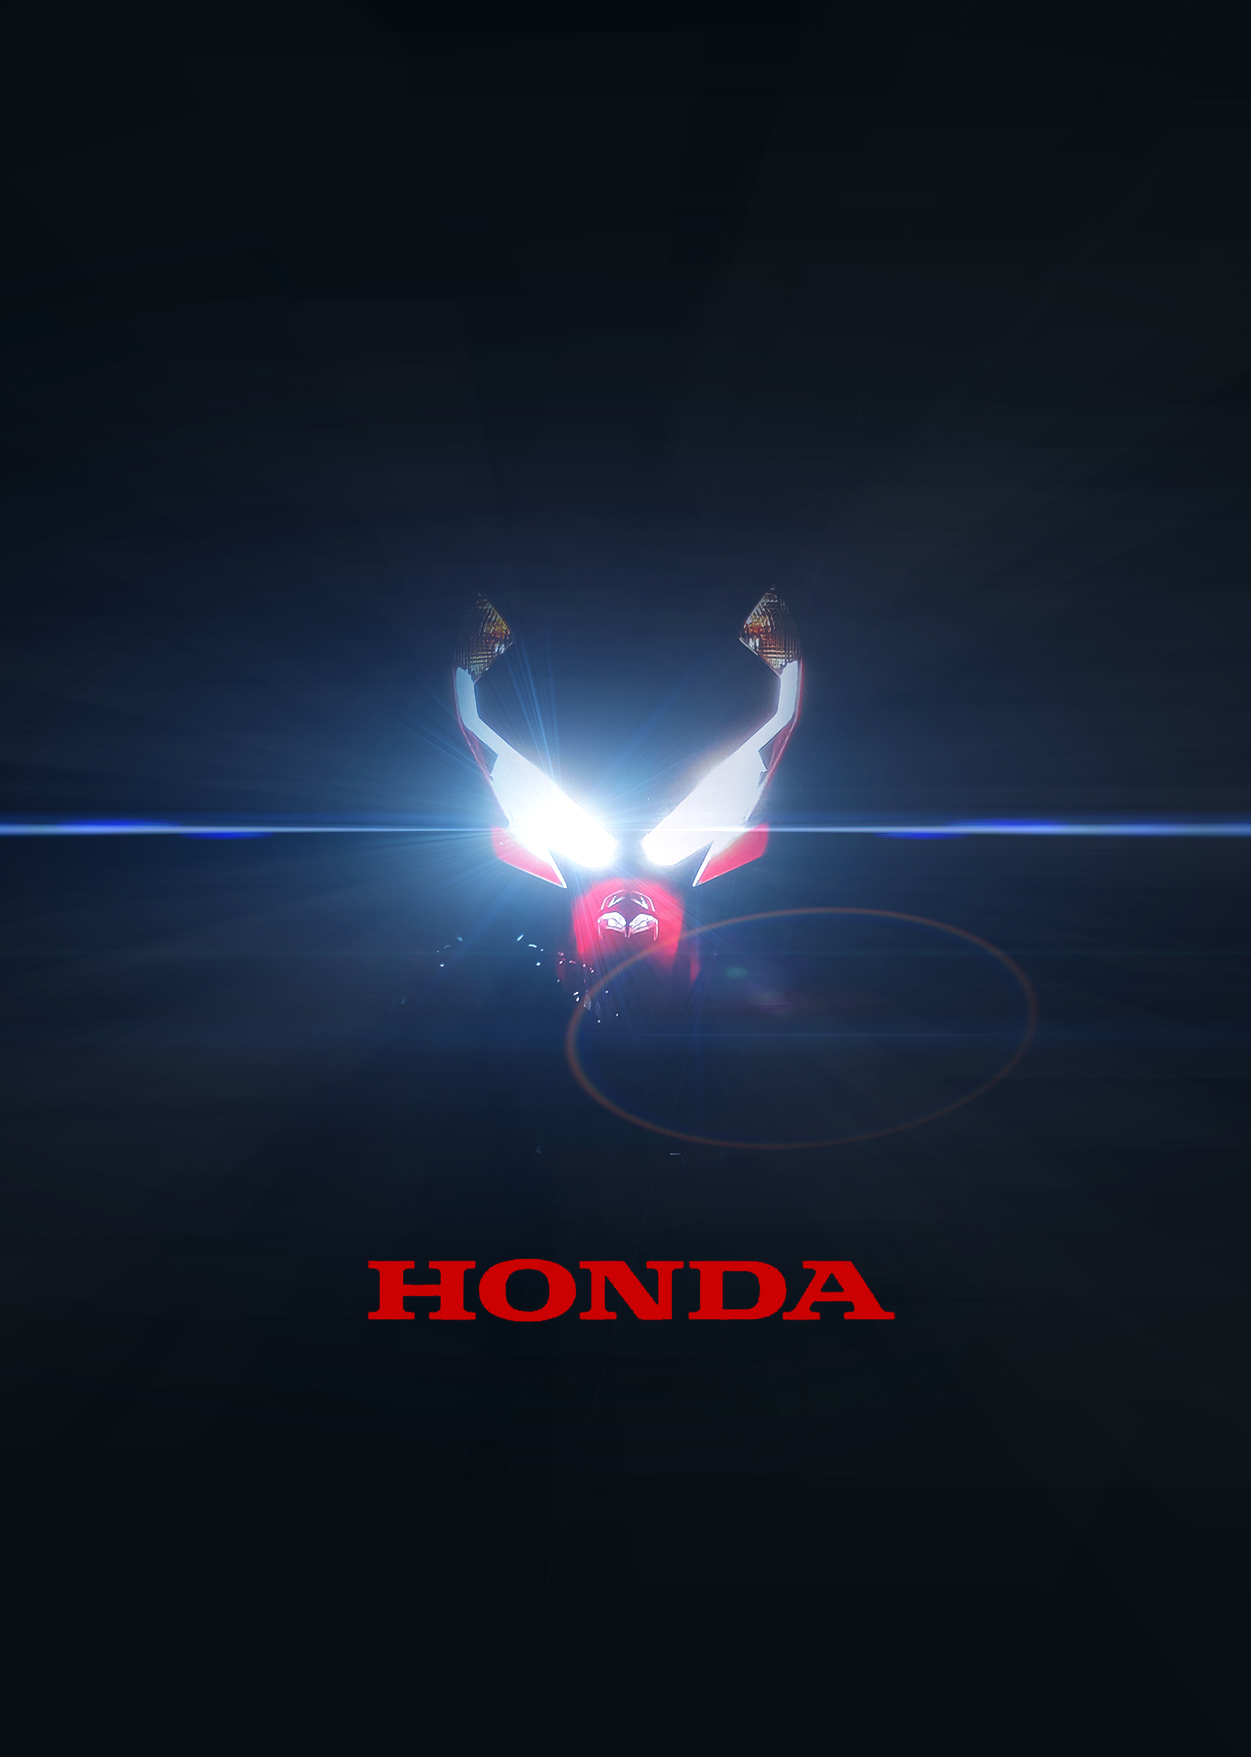 General 1251x1757 Honda motorcycle logo simple background vehicle dark background Japanese motorcycles